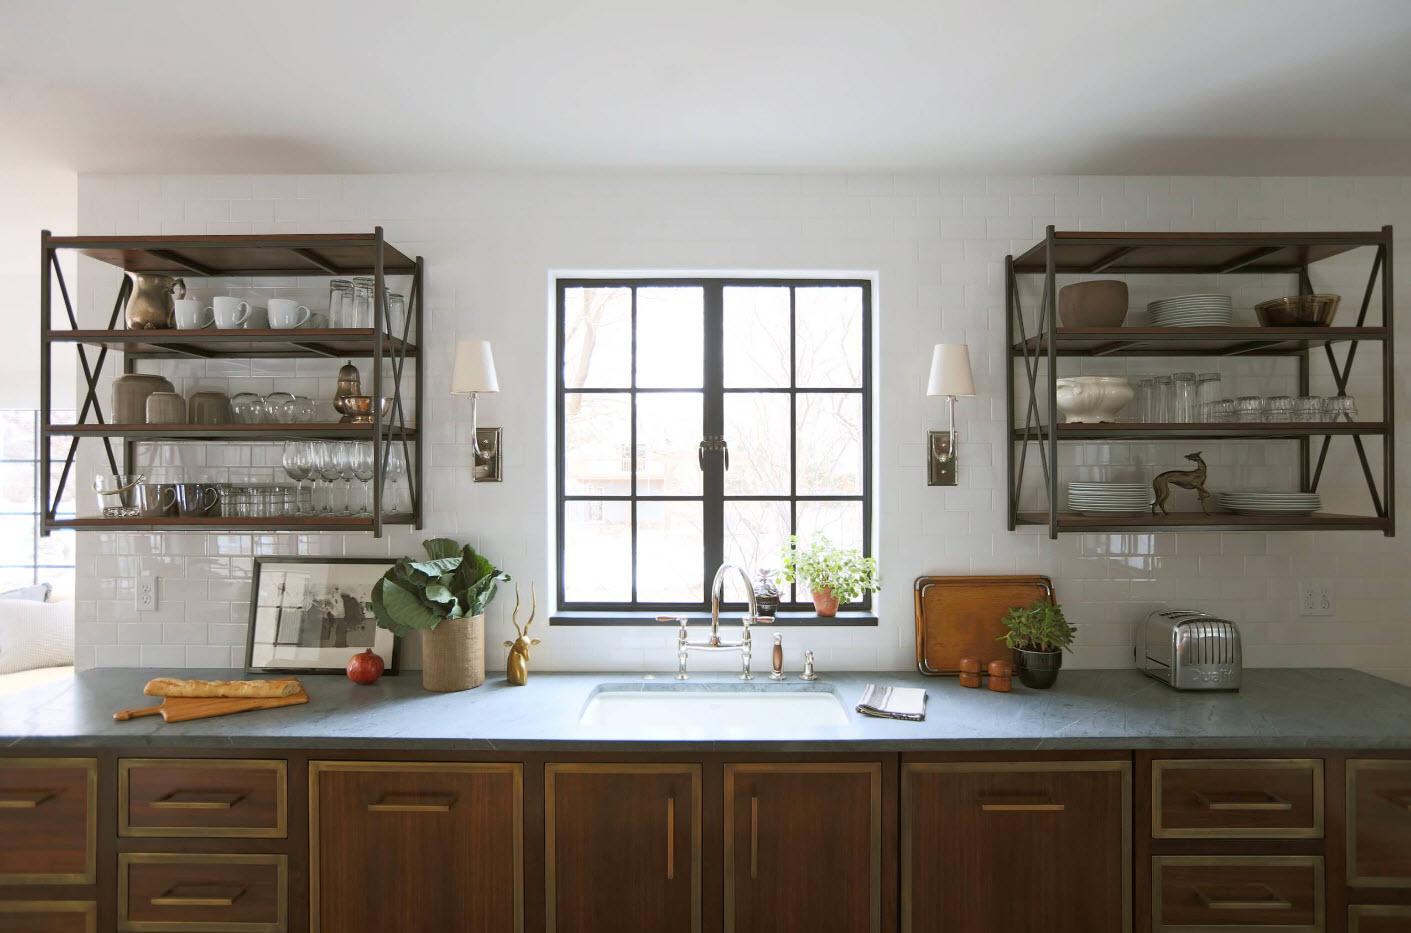 Wall Mounted Kitchen Shelves Visualhunt, Decorative Kitchen Shelving Units